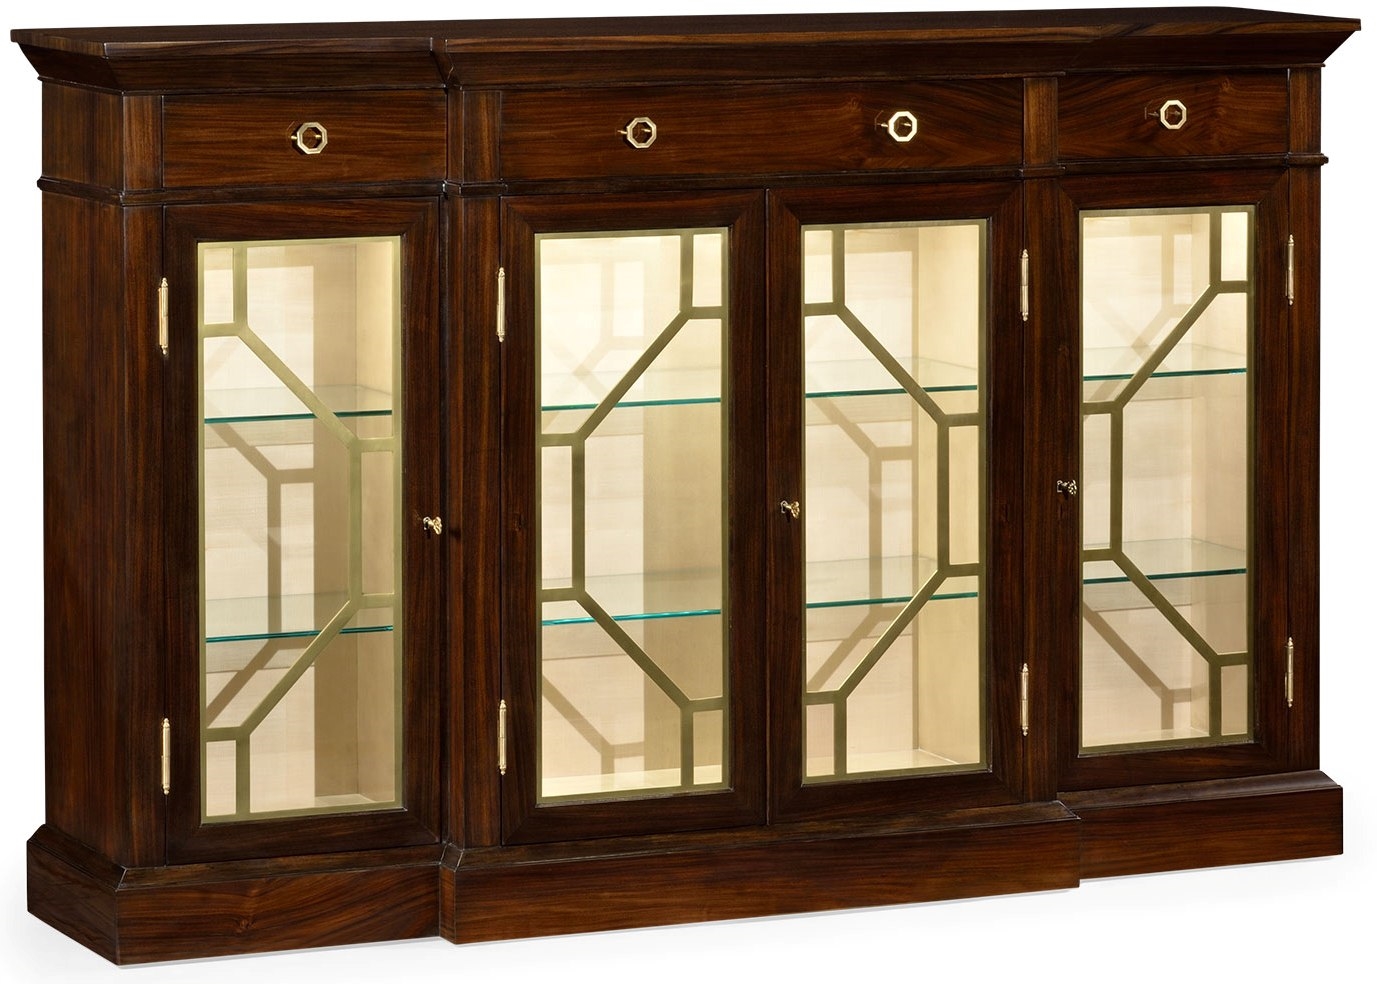 Breakfronts & China Cabinets Elegant Breakfront Display Cabinet with 4 Doors